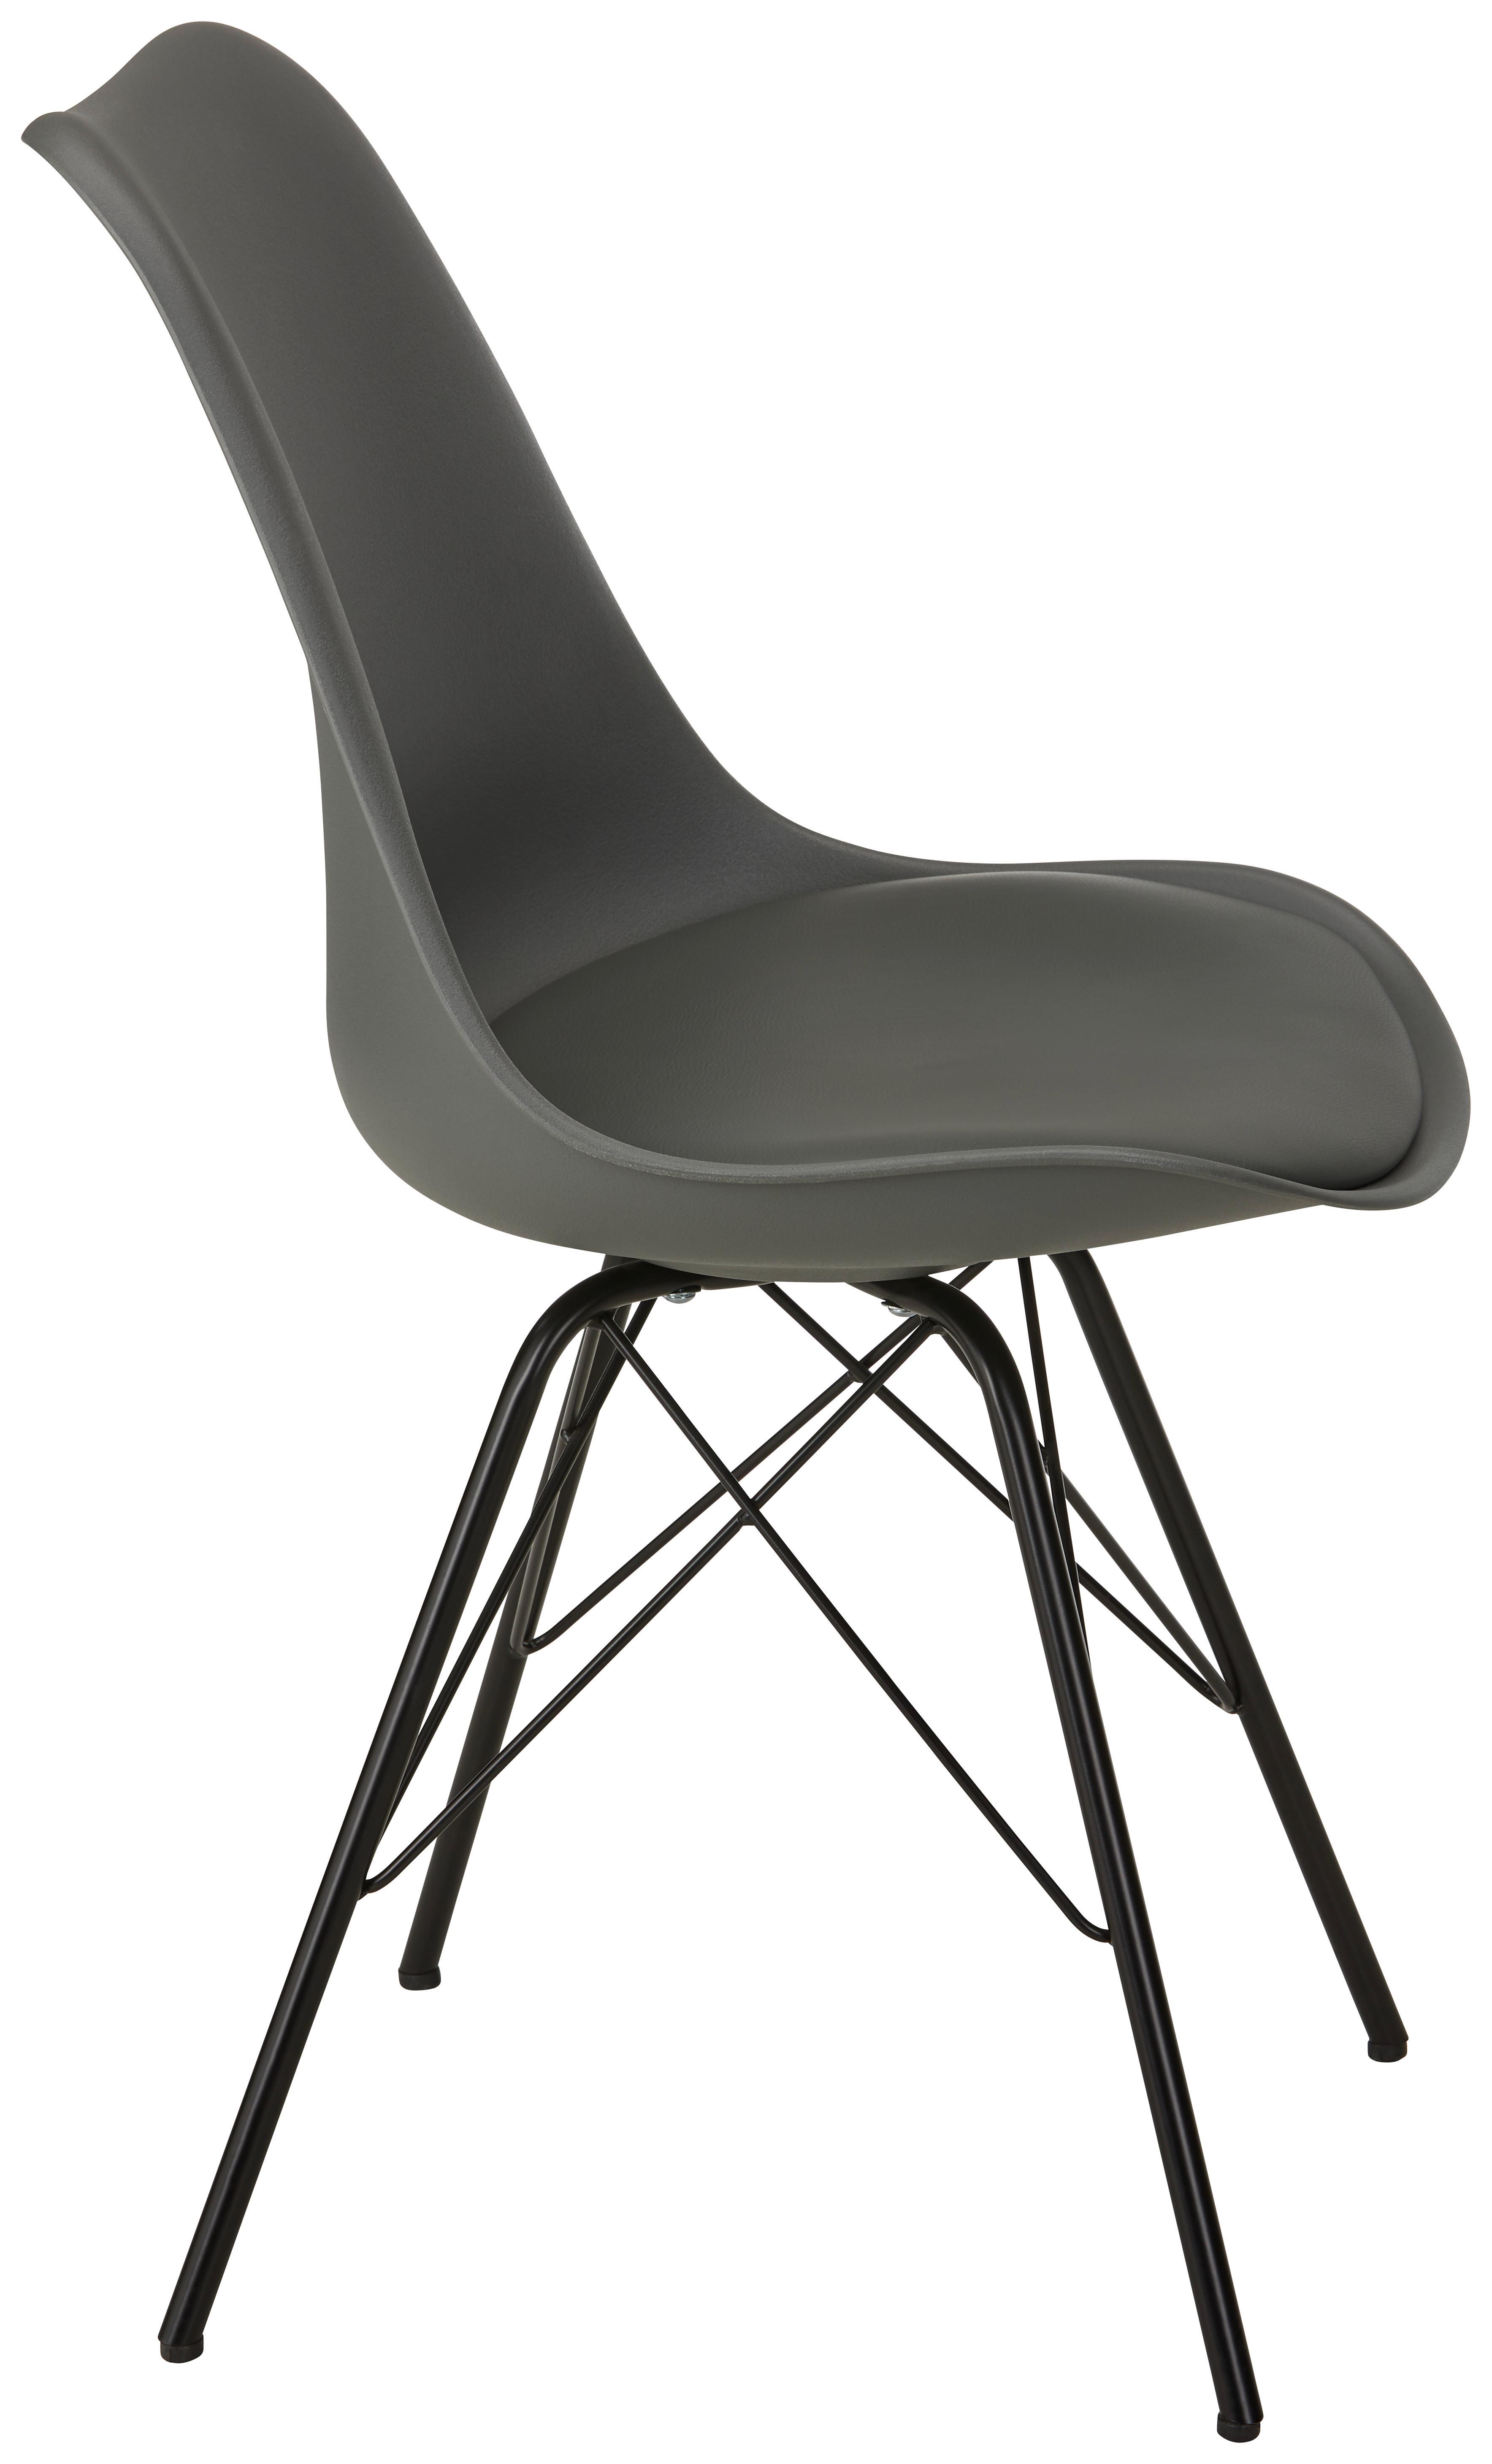 Stuhl in Grau - Schwarz/Grau, MODERN, Kunststoff/Textil (55,5/86/48cm) - Modern Living